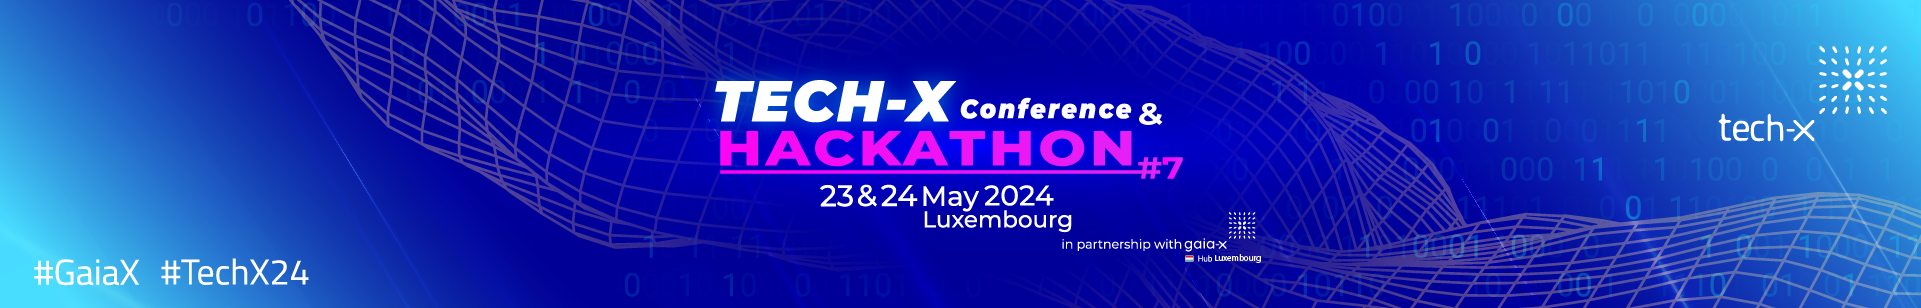 Gaia-X Tech-X Conference & Hackathon #7